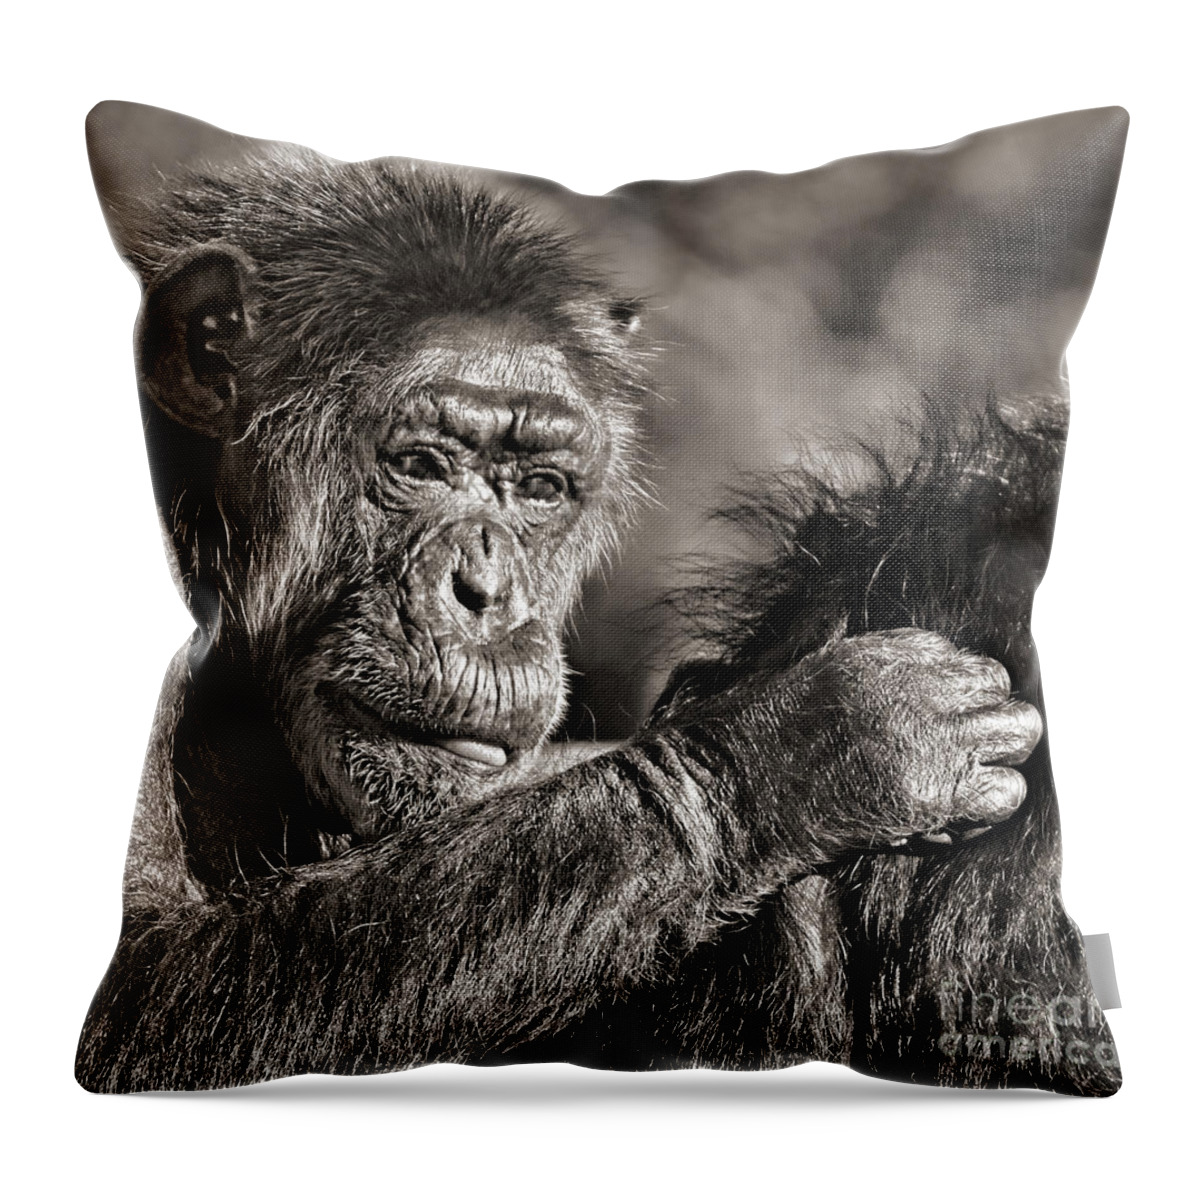 An Elderly Chimp Enjoying Life Throw Pillow featuring the photograph Closeup of an Elderly Chimp Grooming Her Mate by Jim Fitzpatrick